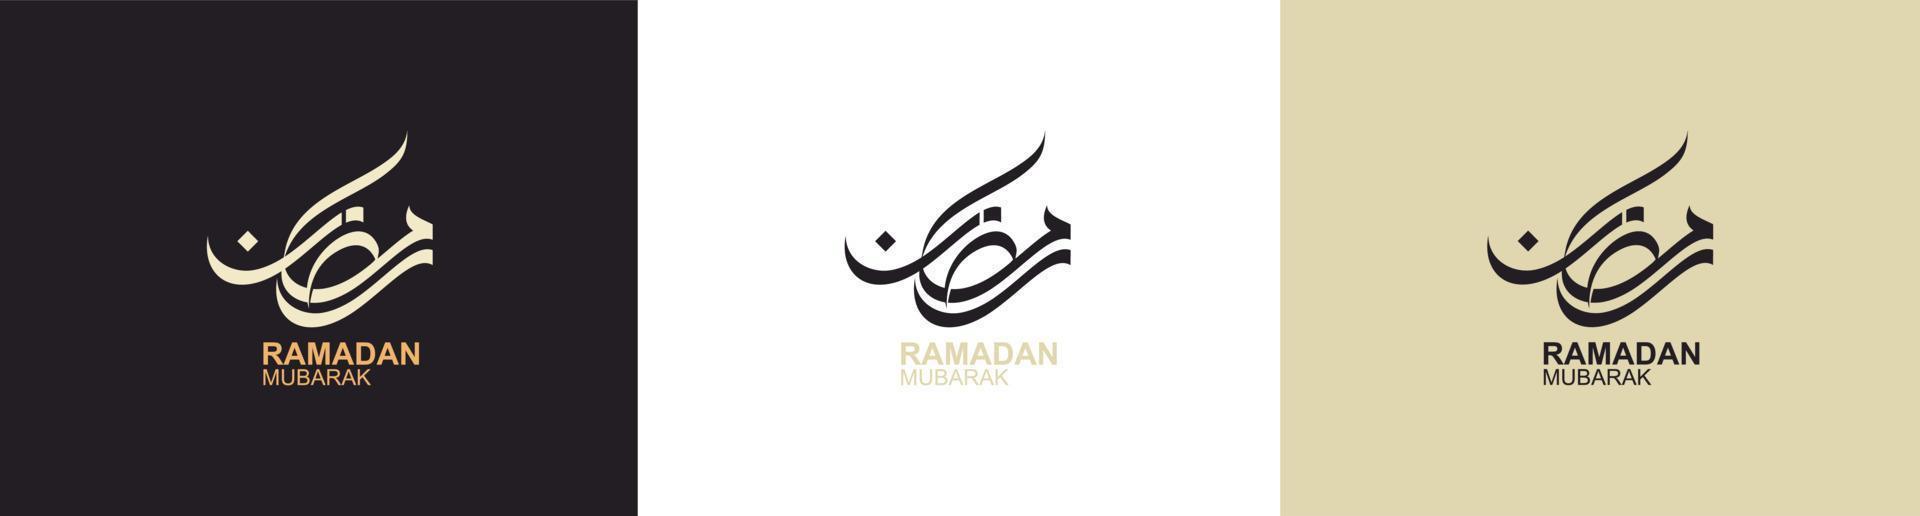 Kareem Ramadan. ramadan moubarak. traduit joyeux, saint ramadan. mois de jeûne pour les musulmans. typographie arabe. vecteur